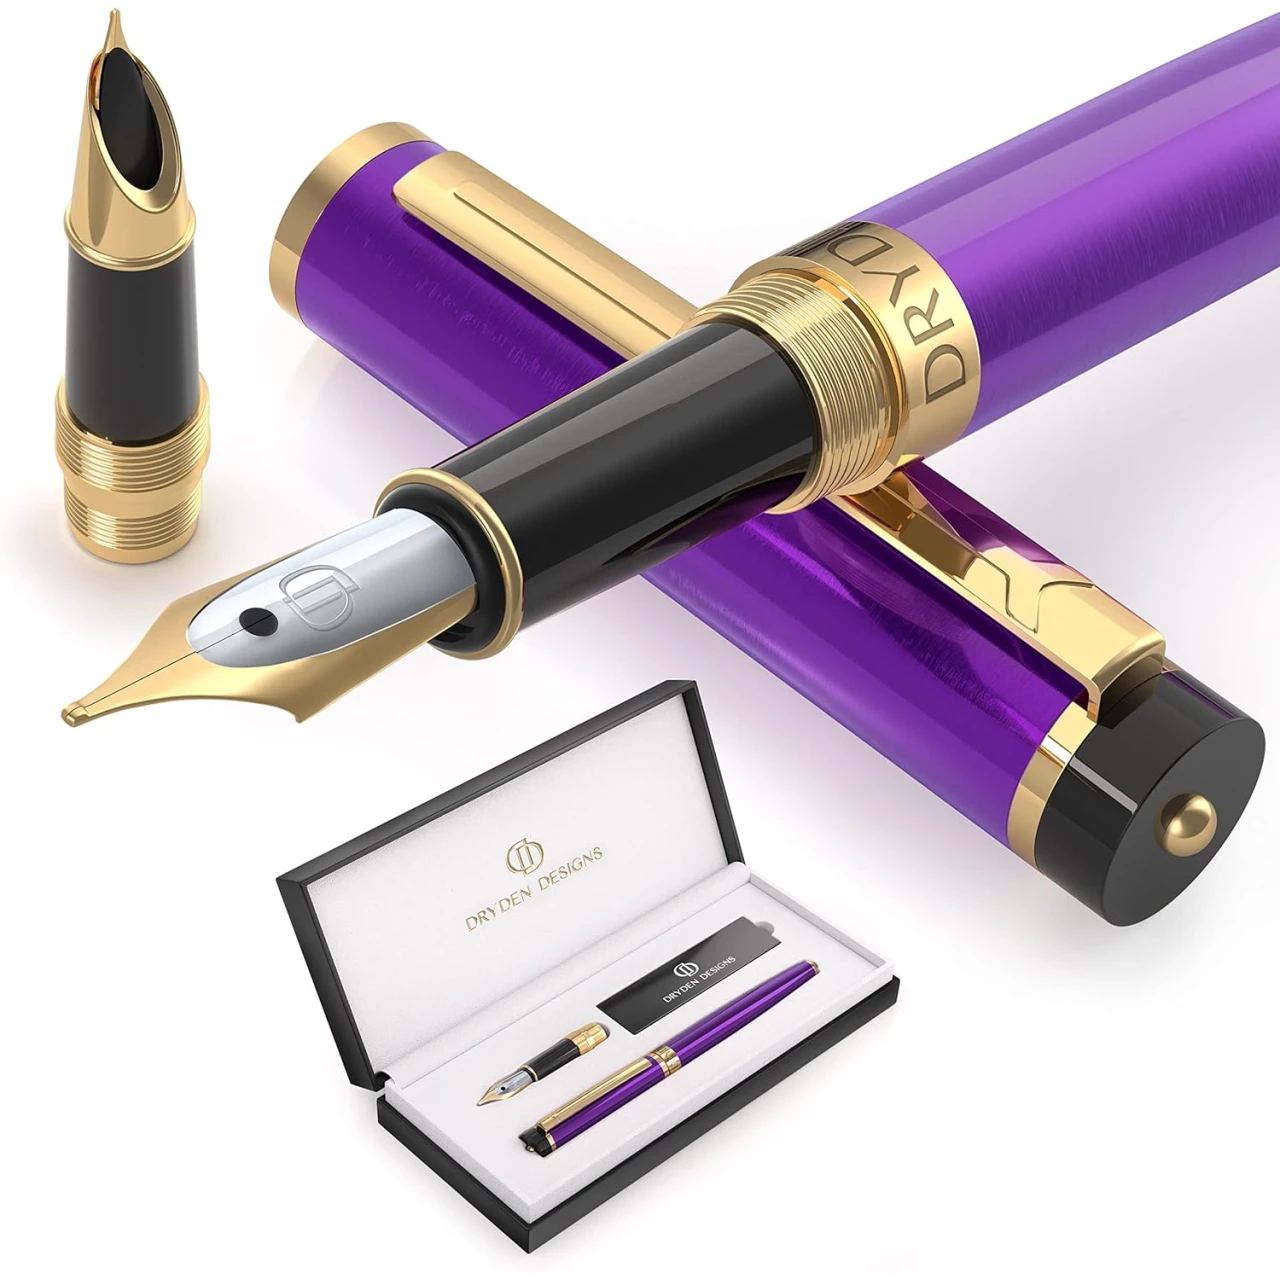 Dryden Designs Fountain Pen - Medium Nib &amp; Fine Nibs | Includes Luxury Box, 6 Ink Cartridges - 3 Black 3 Blue and Ink Refill Converter - Decadent Purple